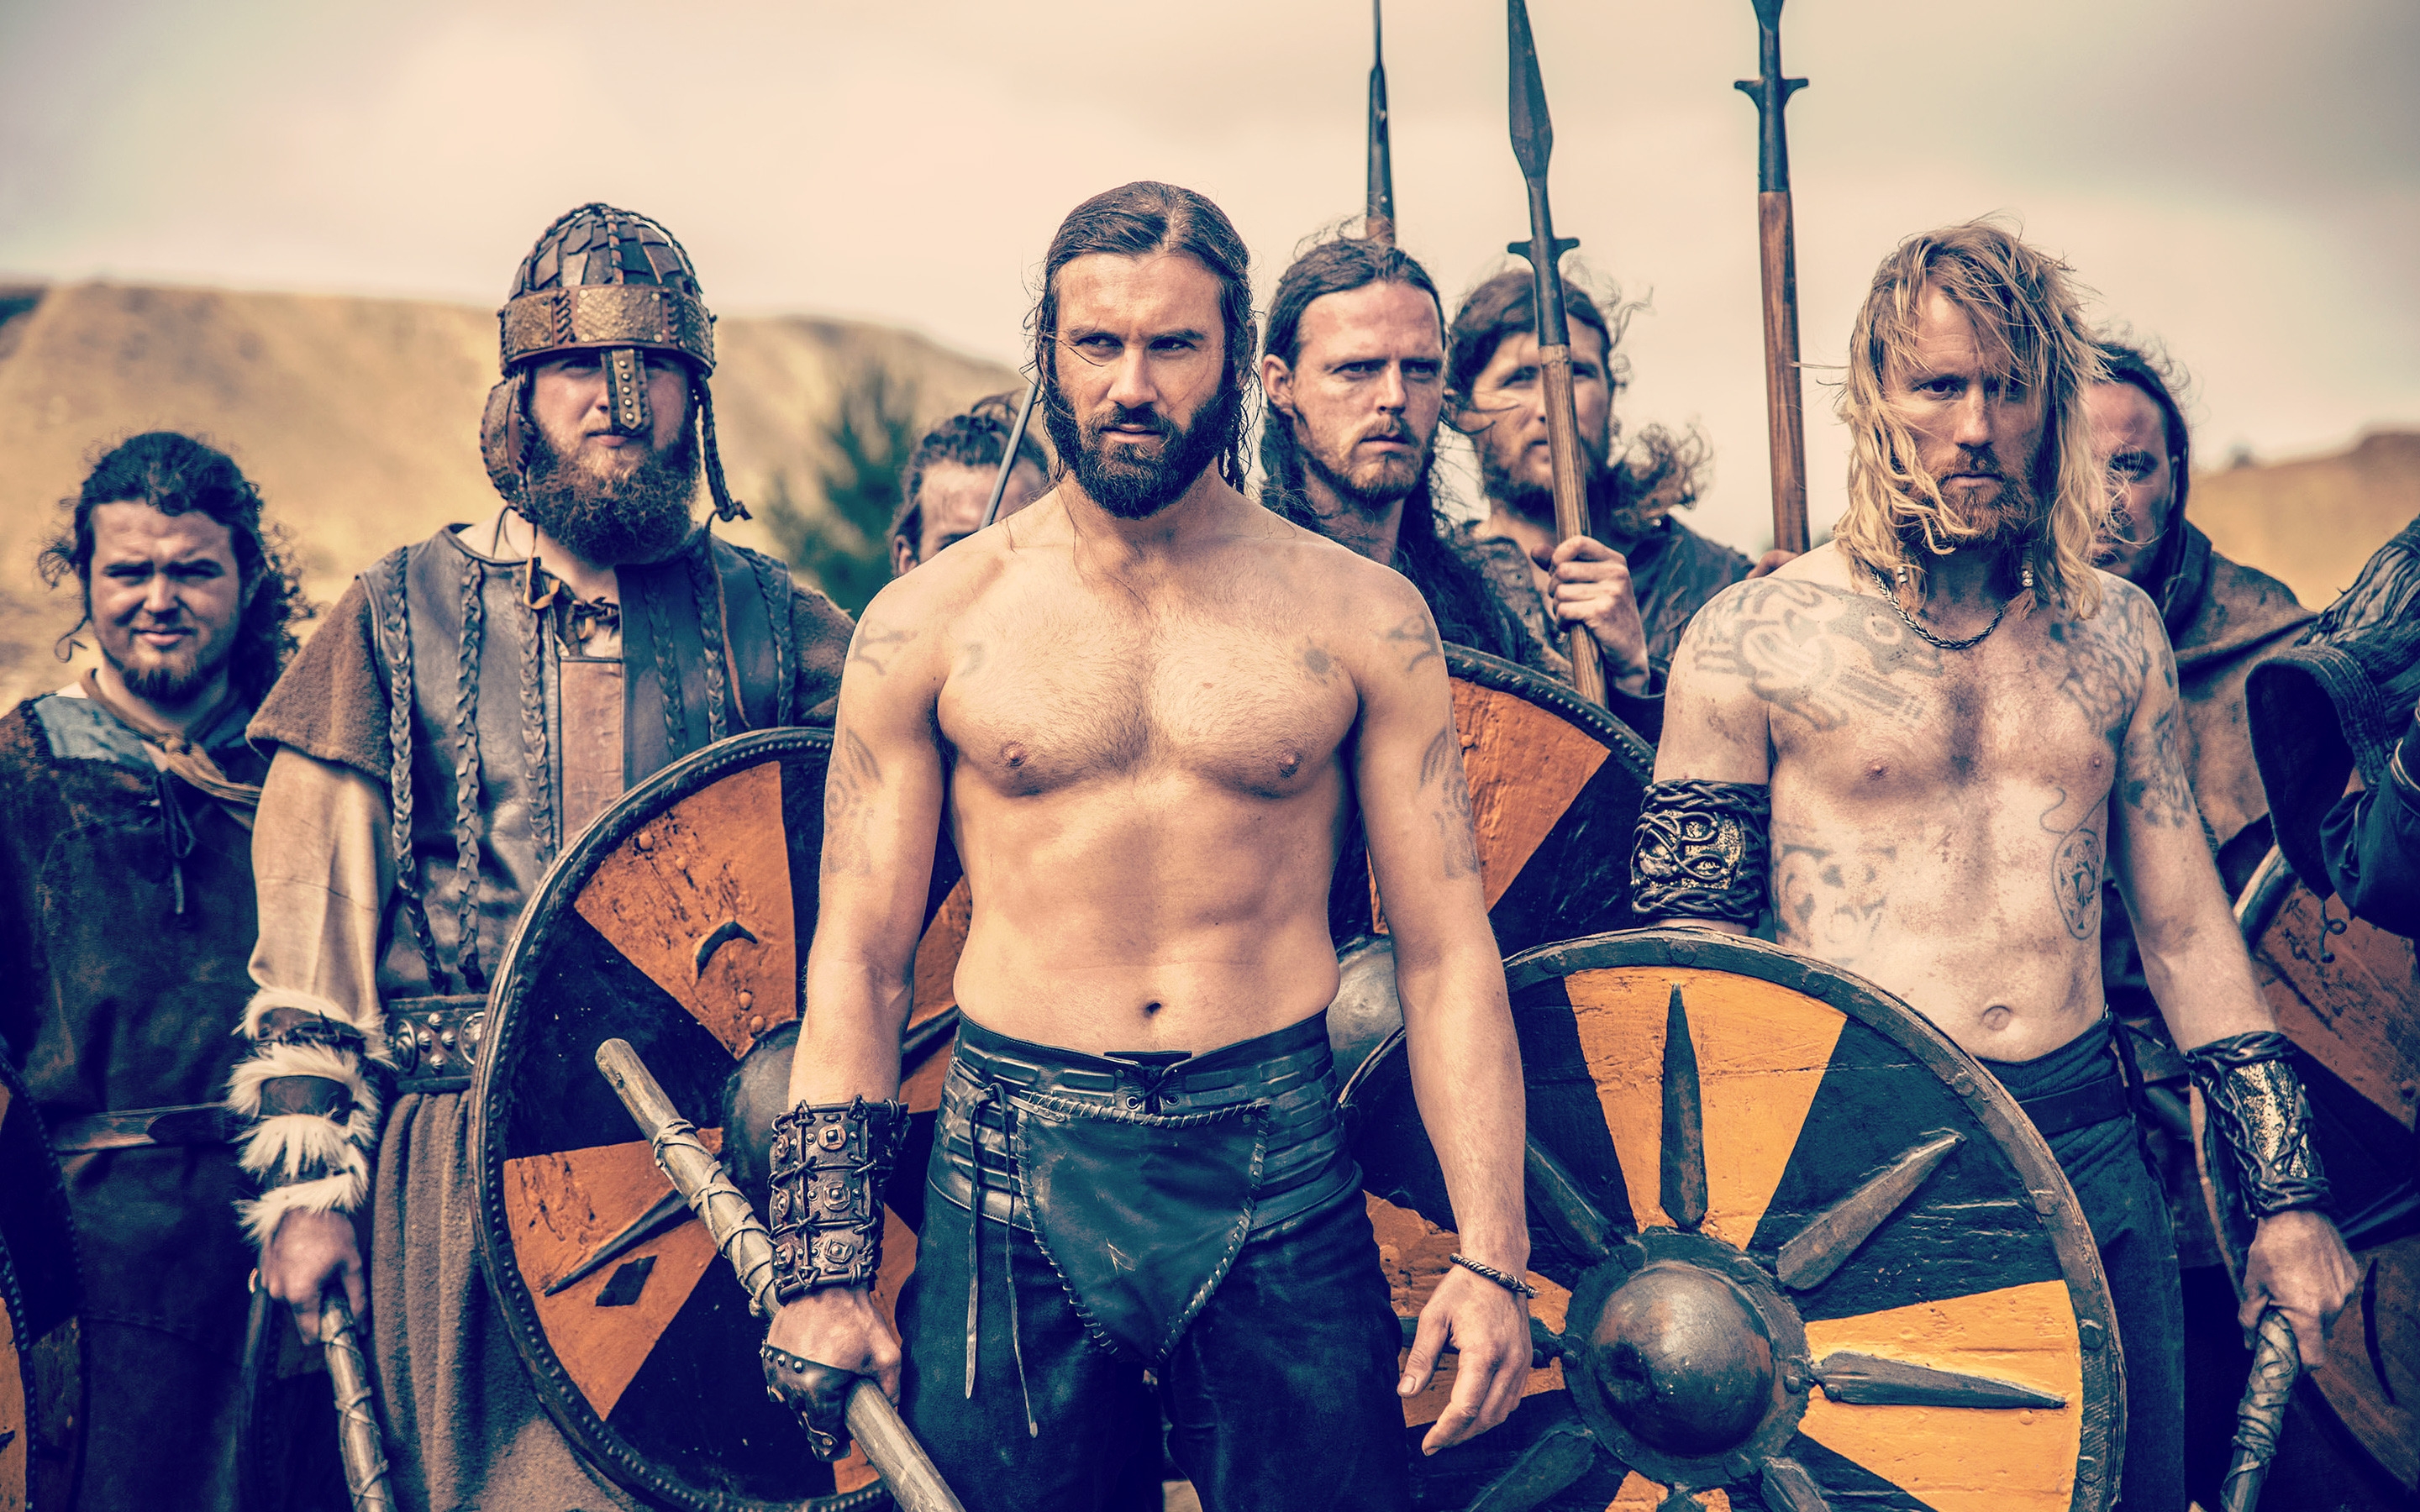 Vikings Season 2 Scene for 2880 x 1800 Retina Display resolution